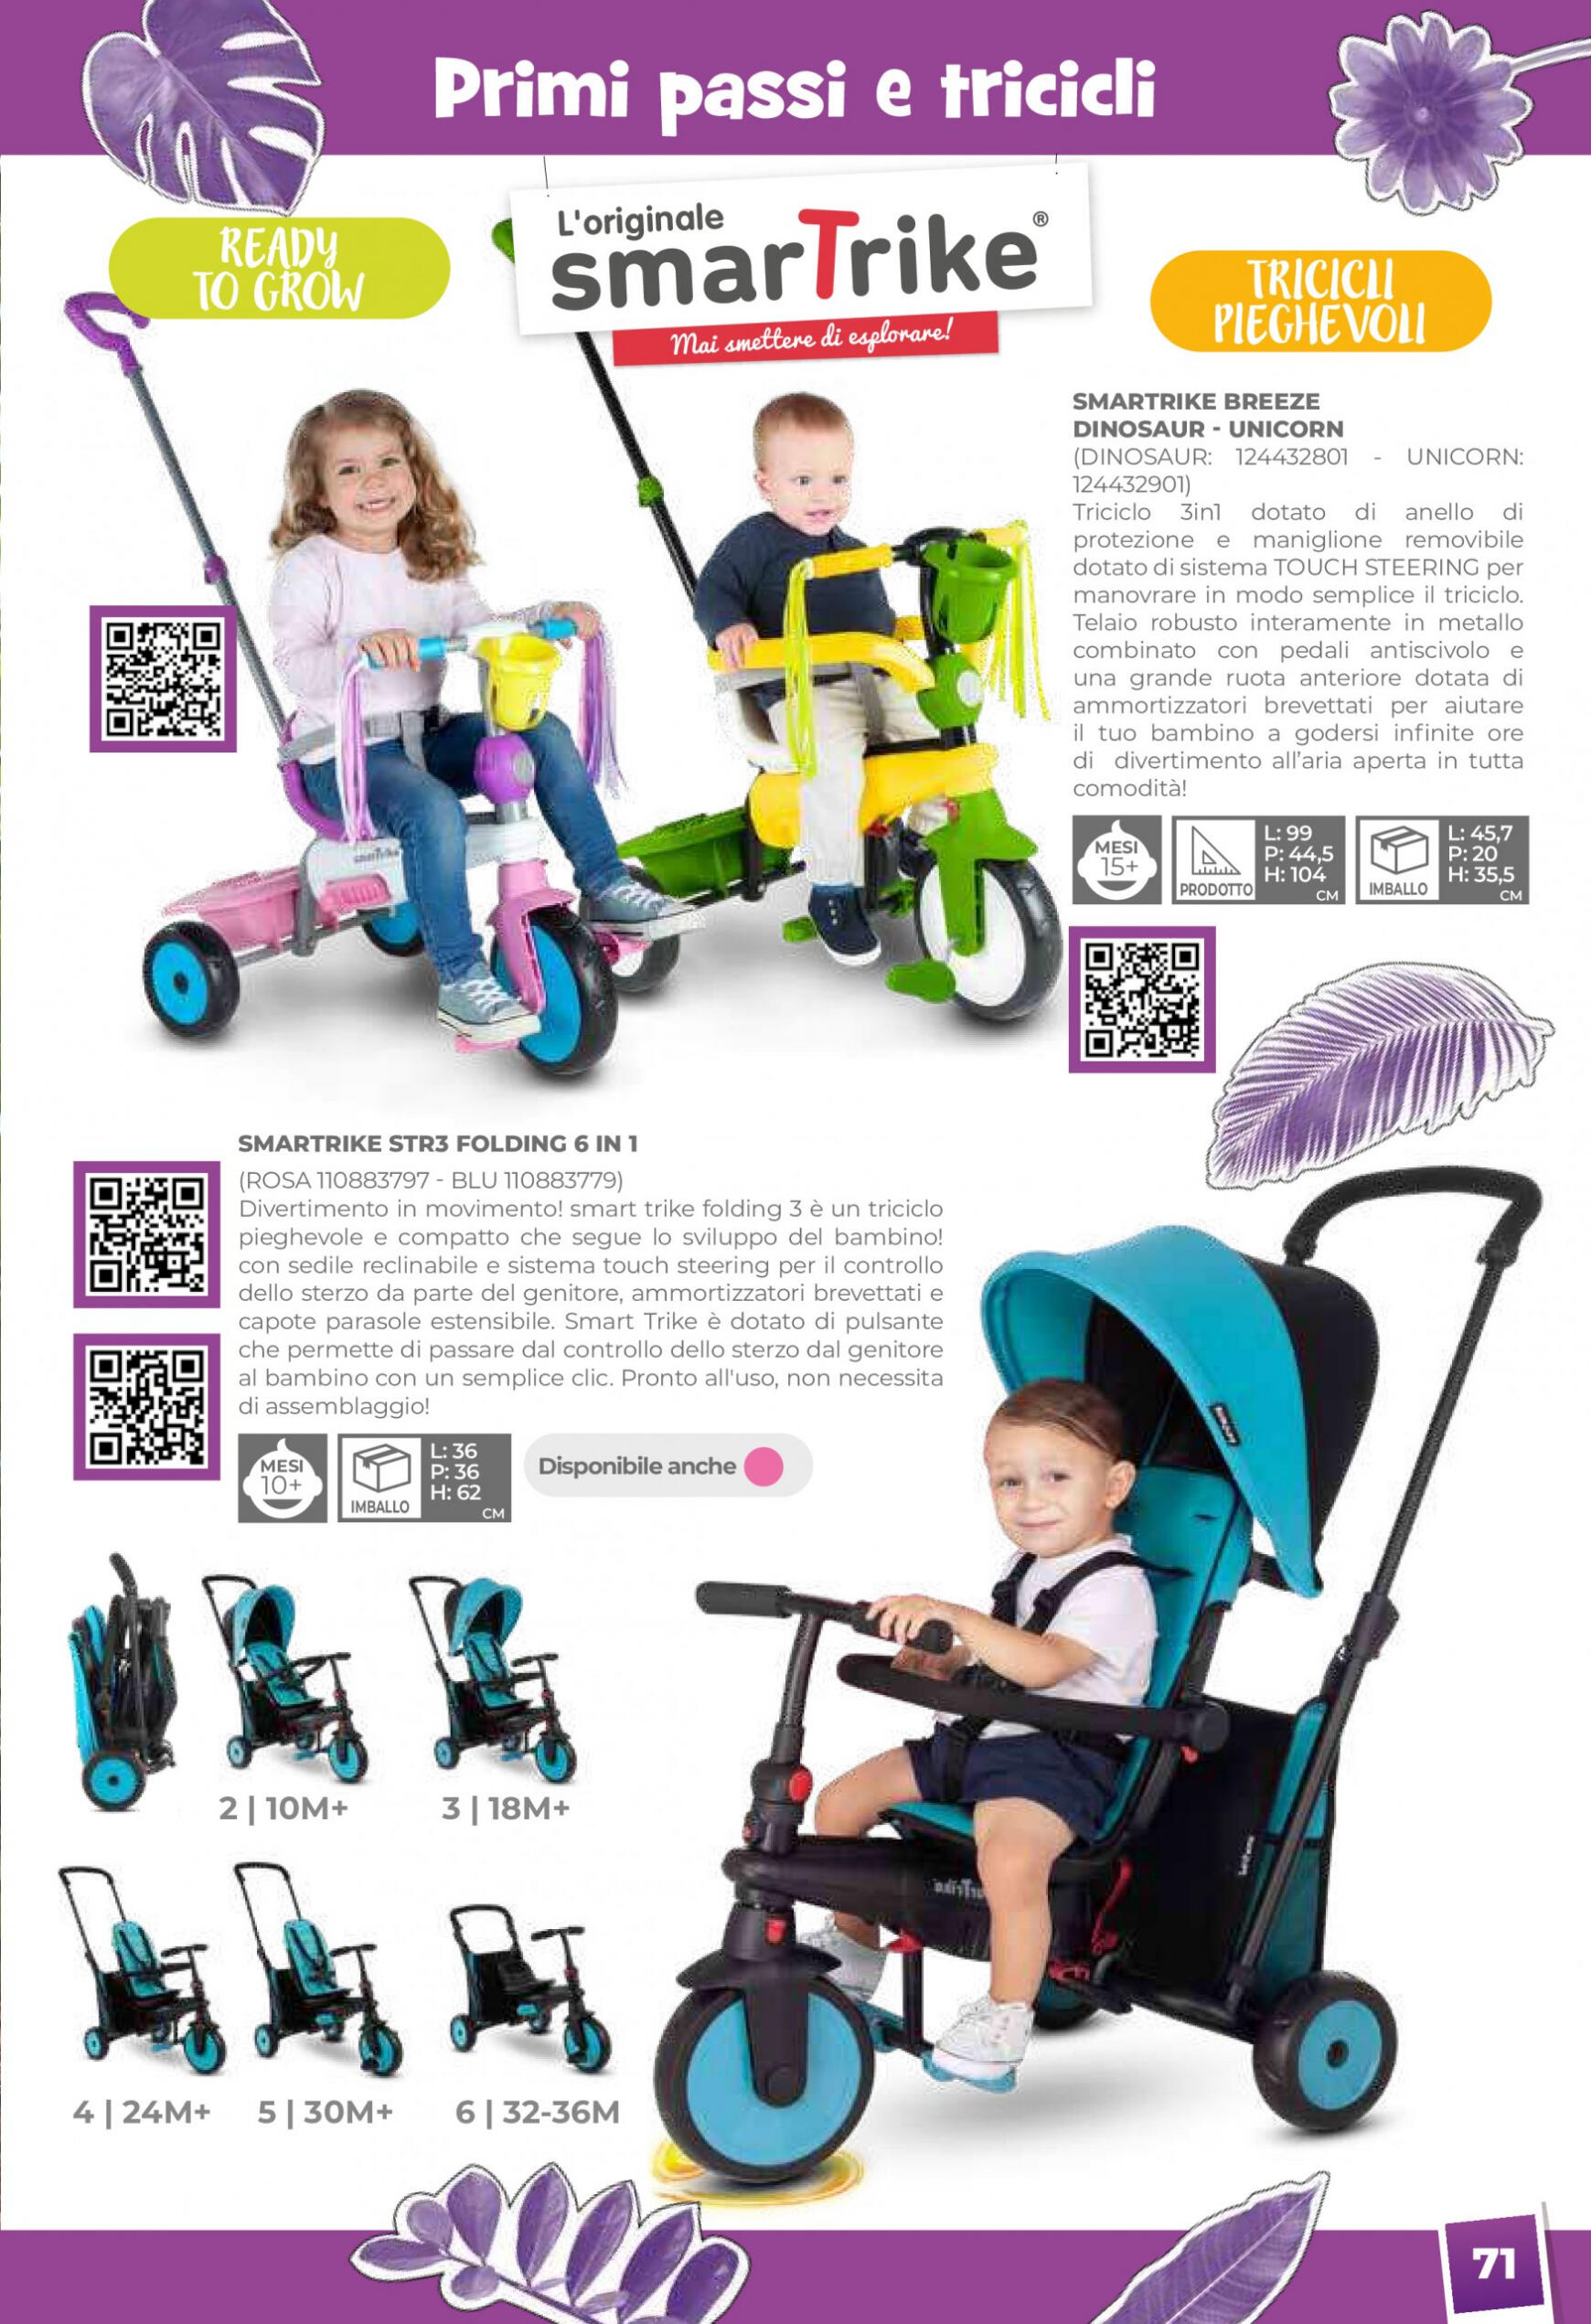 toys-center - Nuovo volantino Toys Center 01.05. - 31.12. - page: 73